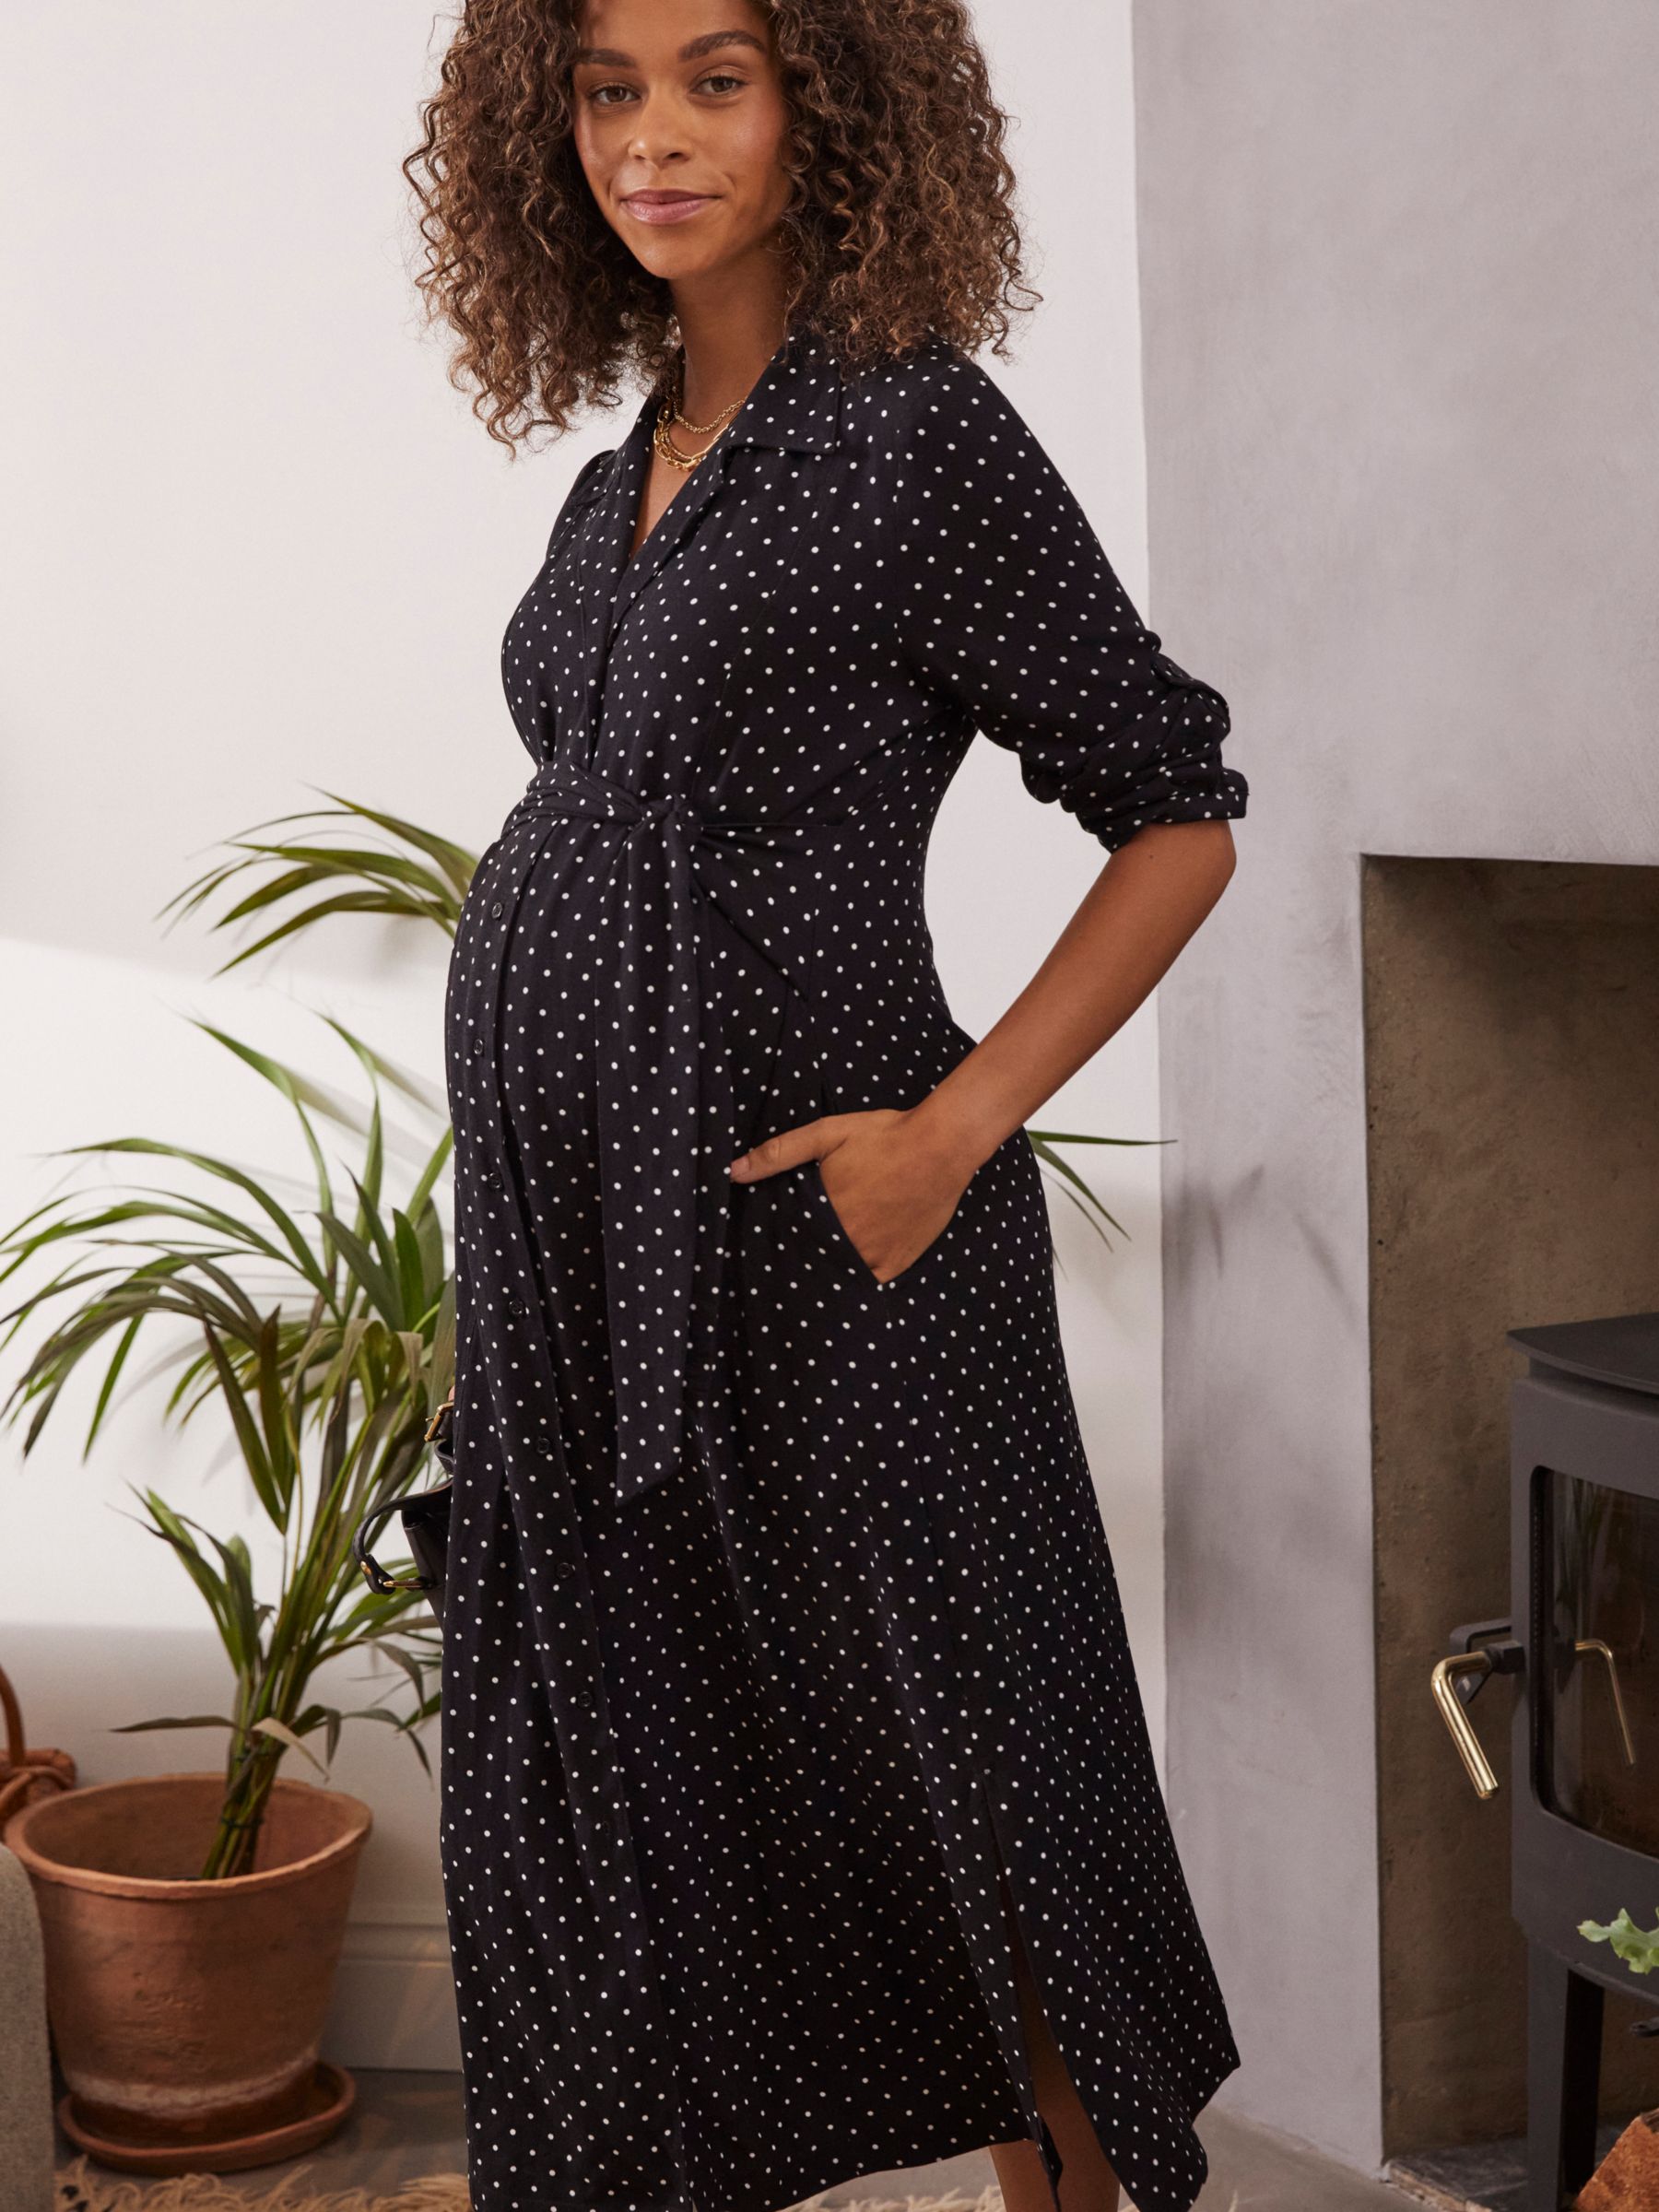 Isabella Oliver Kelsy Polka Dot Maternity Dress, Black Polka Dot Prt, 4-6